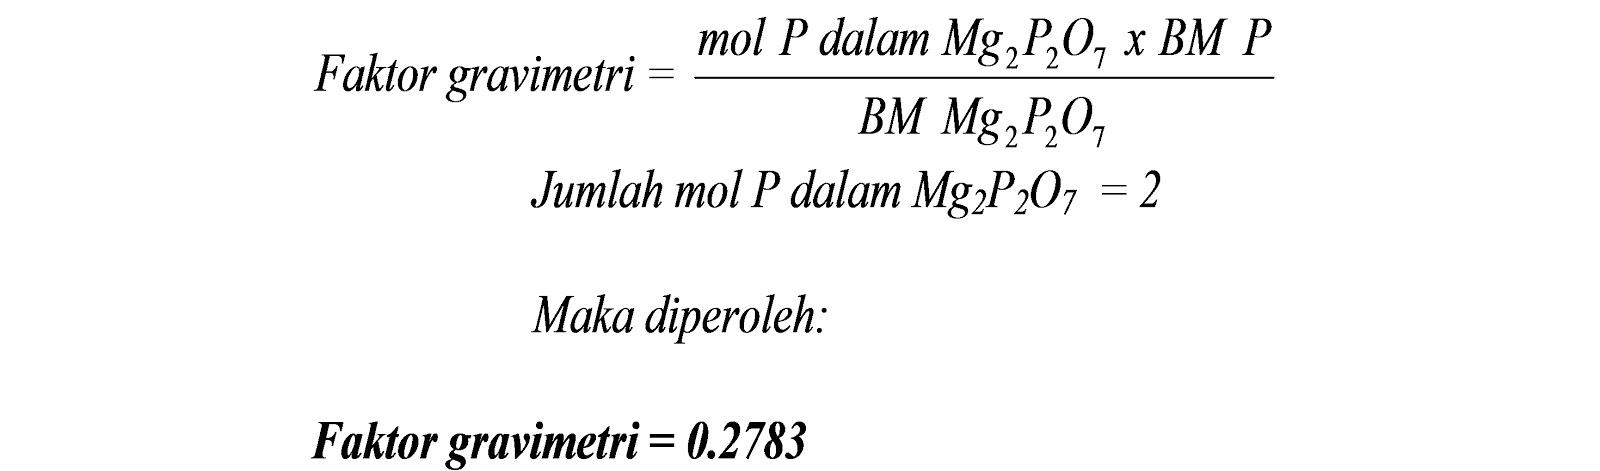 Quick ratio Formula. Aci Test ratio. Mg p коэффициент